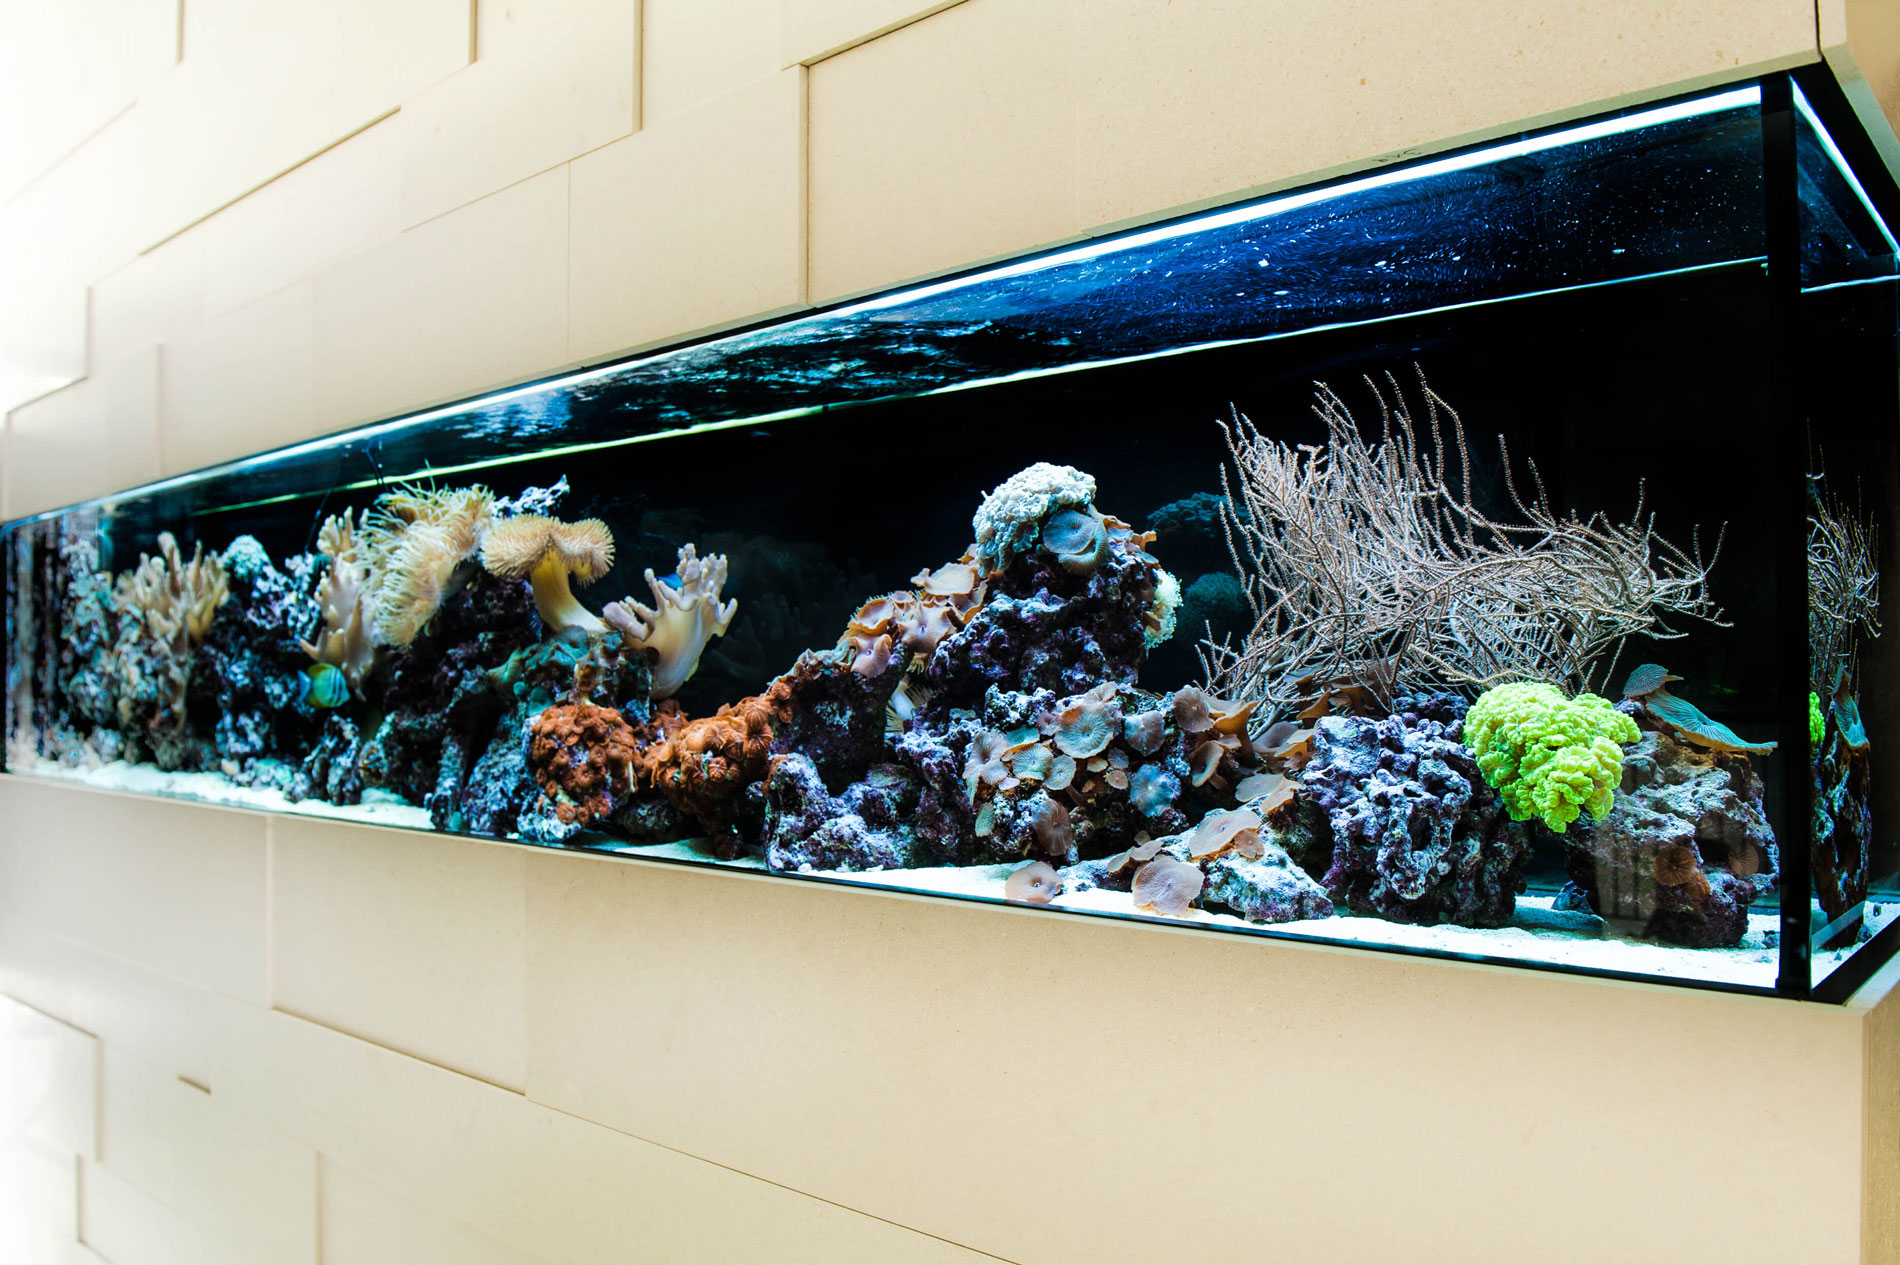 Bestseller: Meerwasser Aquarium bauen & pflegen wie die Profis